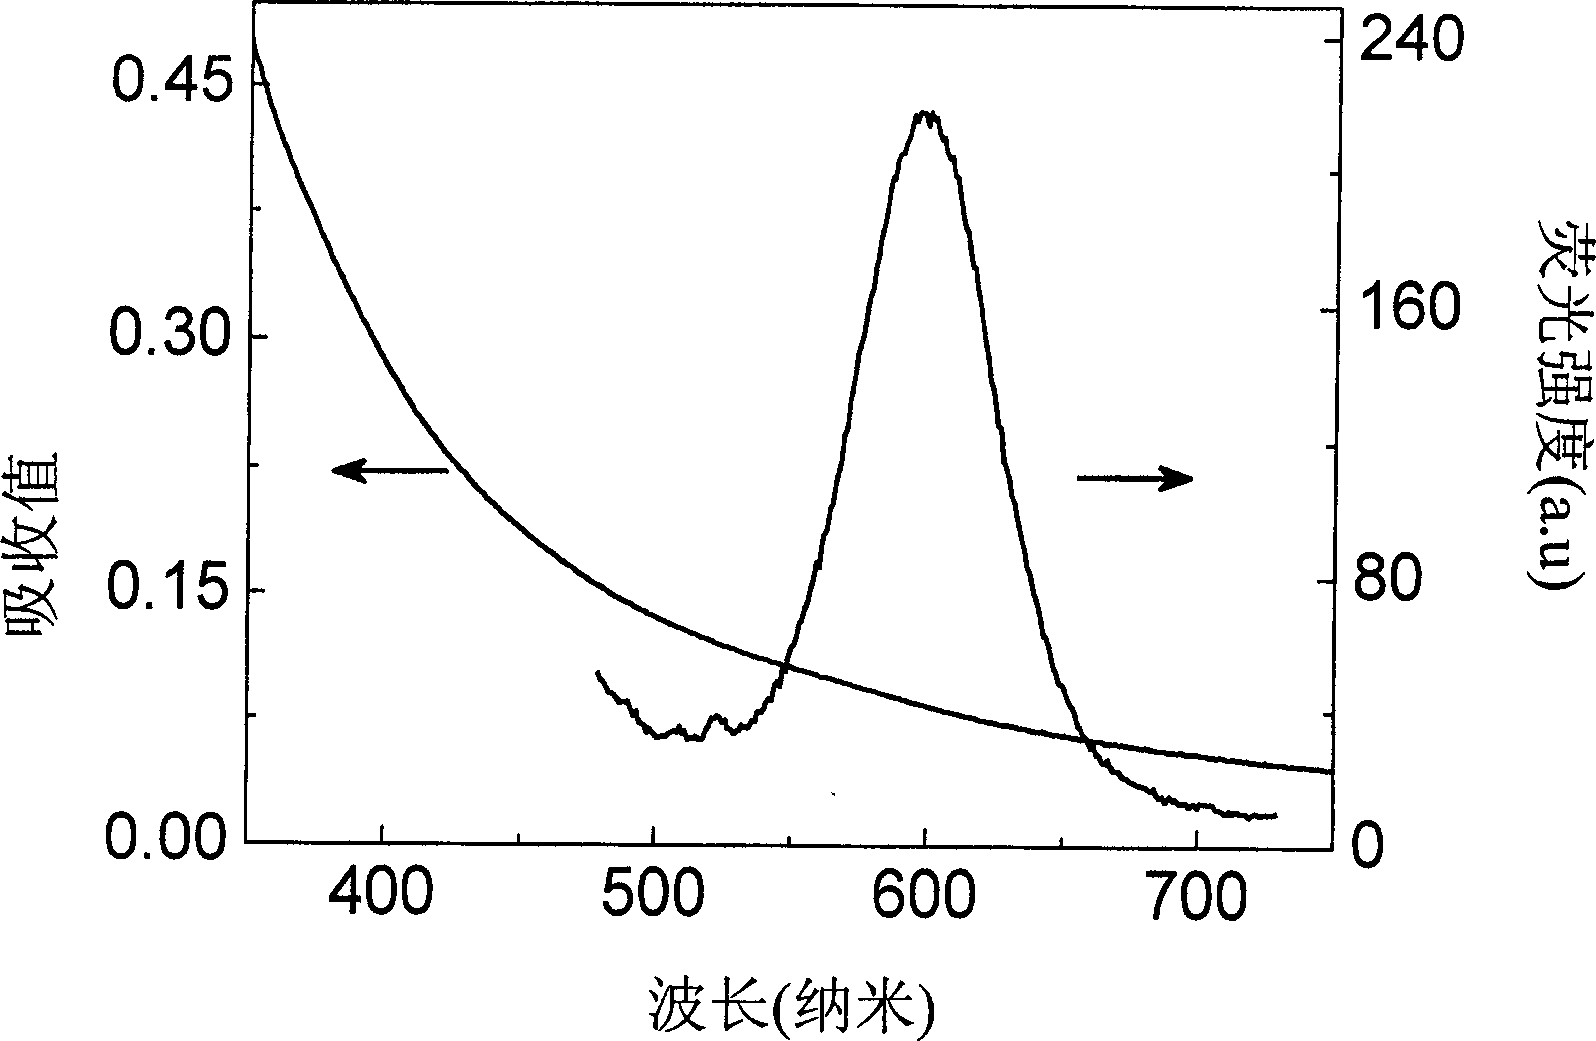 Silicon dioxide fluorescent microball containing cadmium telluride fluorescence quantum point